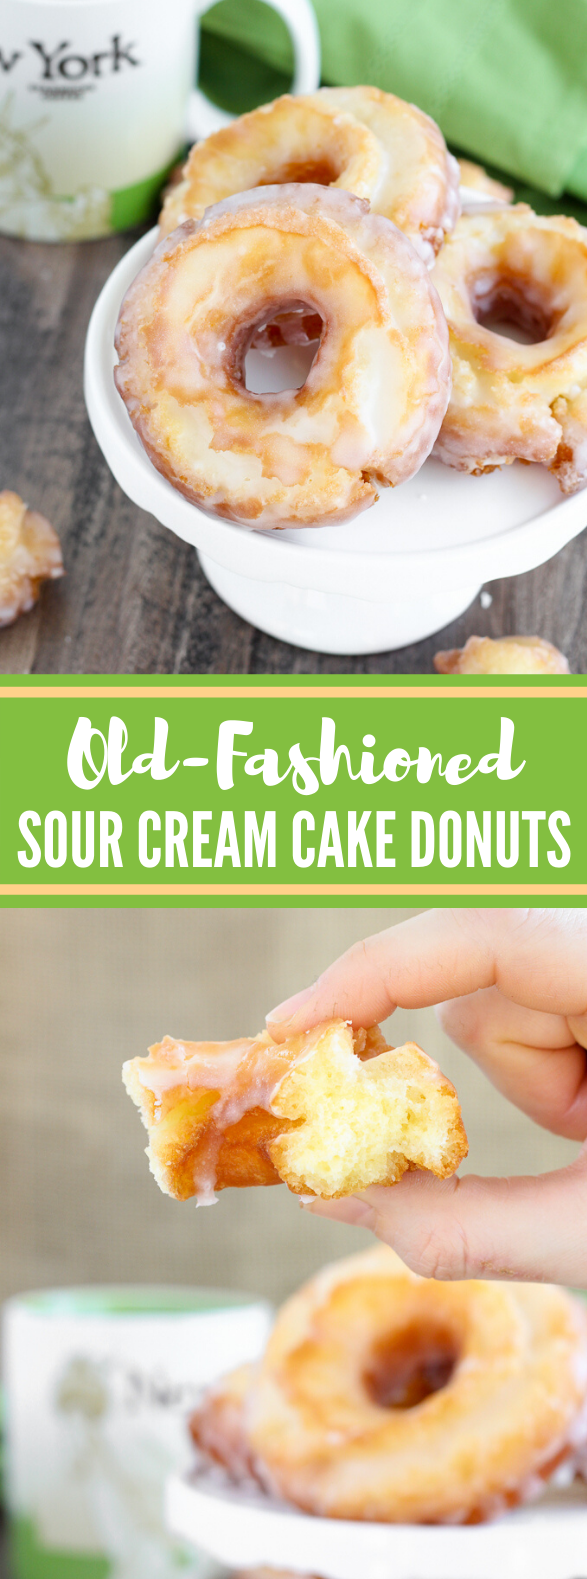 Old Fashioned Sour Cream Cake Donuts #desserts #breakfast